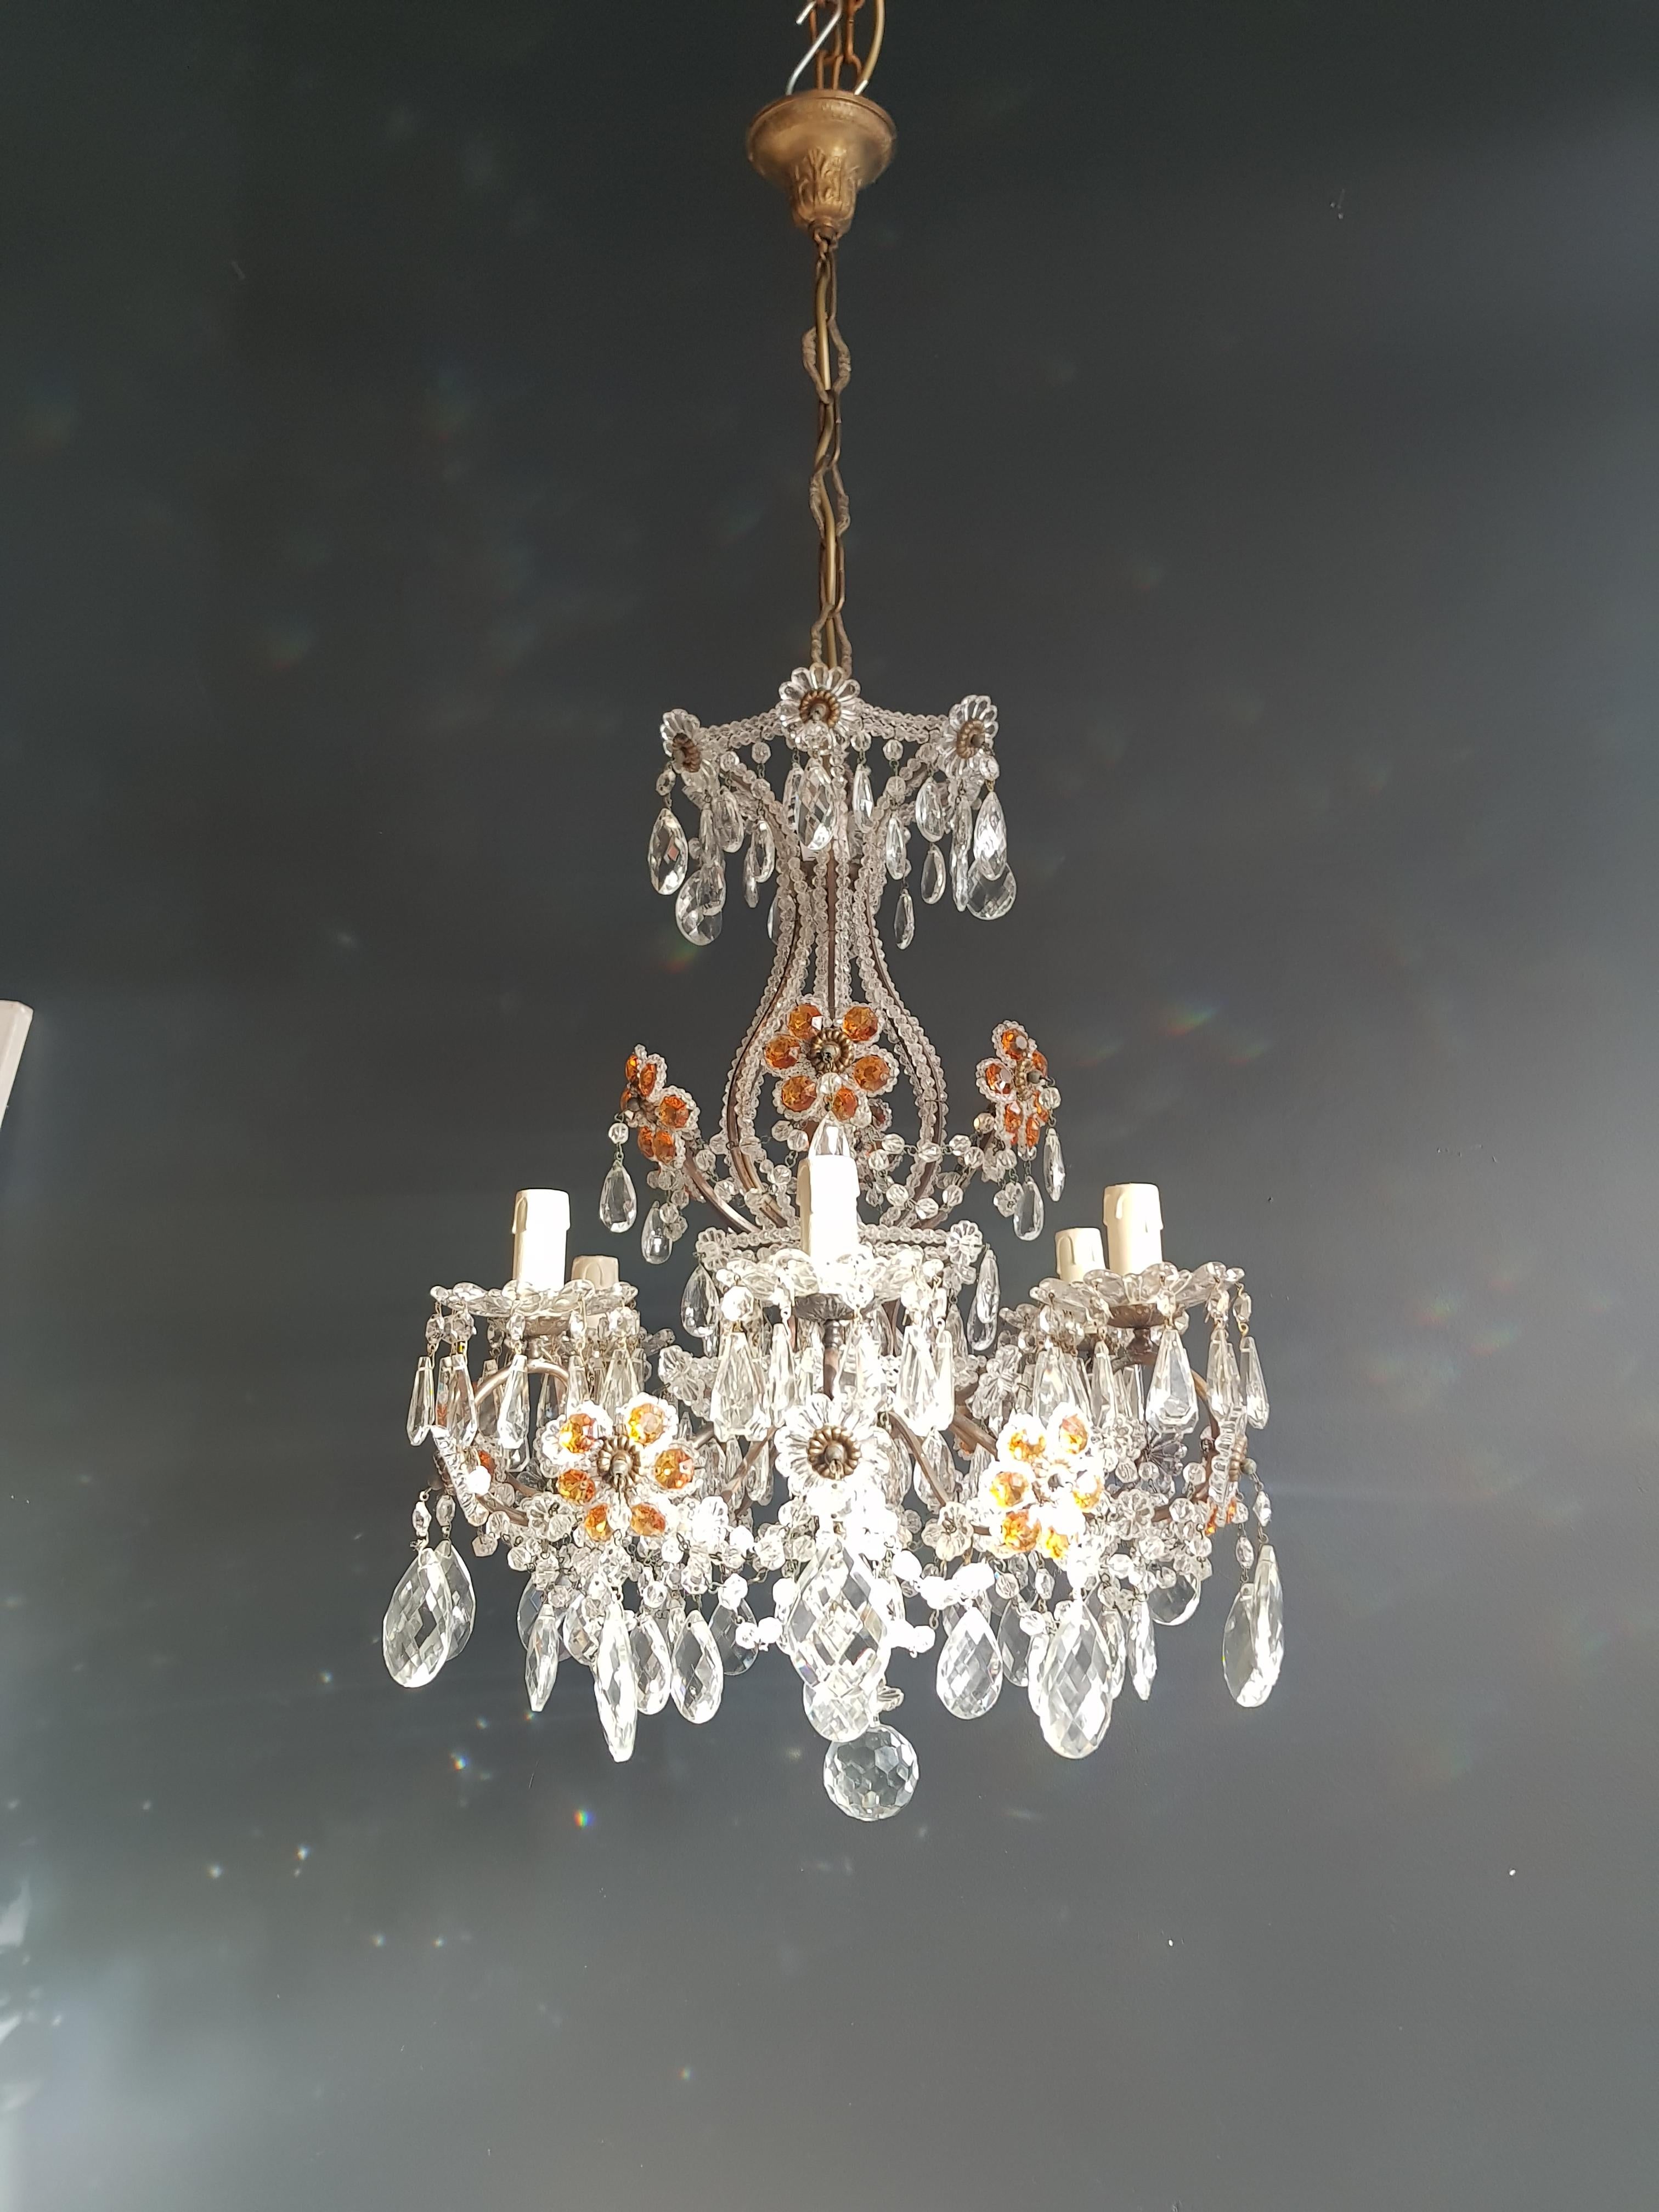 Italian Amber Crystal Antique Chandelier Ceiling Murano Florentiner Lustre Art Nouveau 